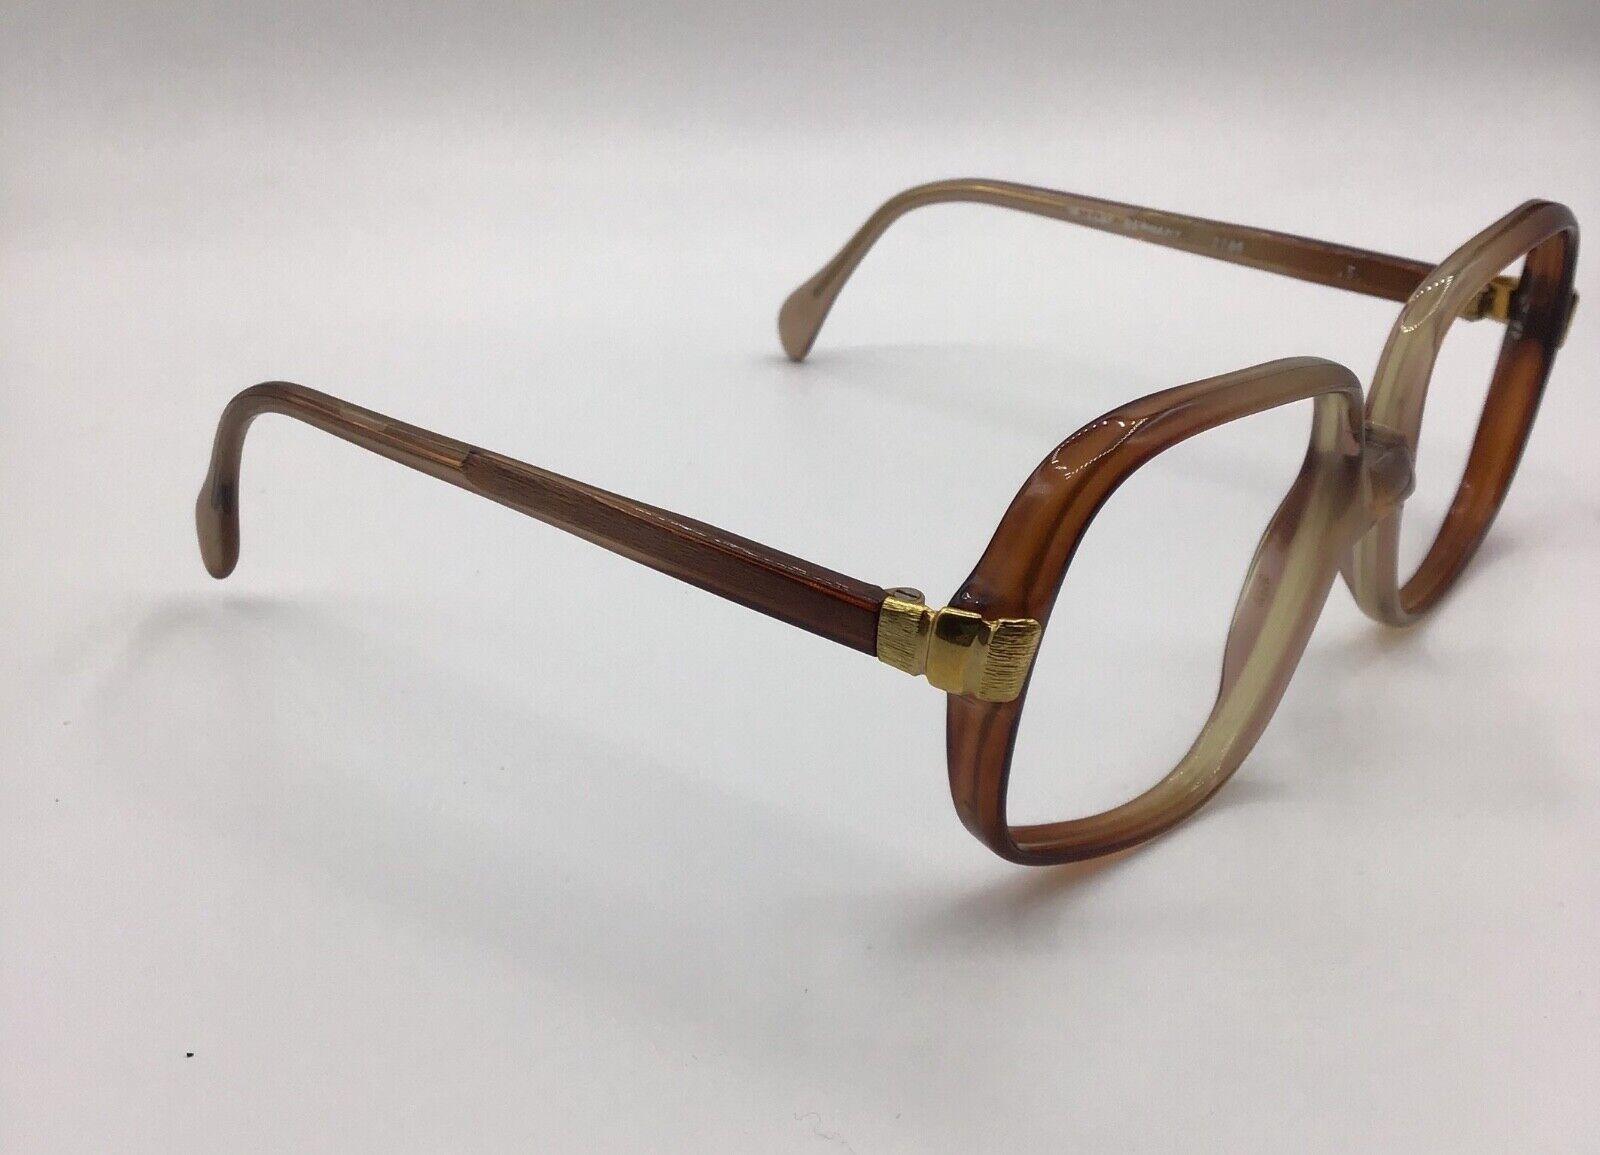 Metzler occhiale vintage Eyewear Germany frame brillen lunettes 3100 model 80s